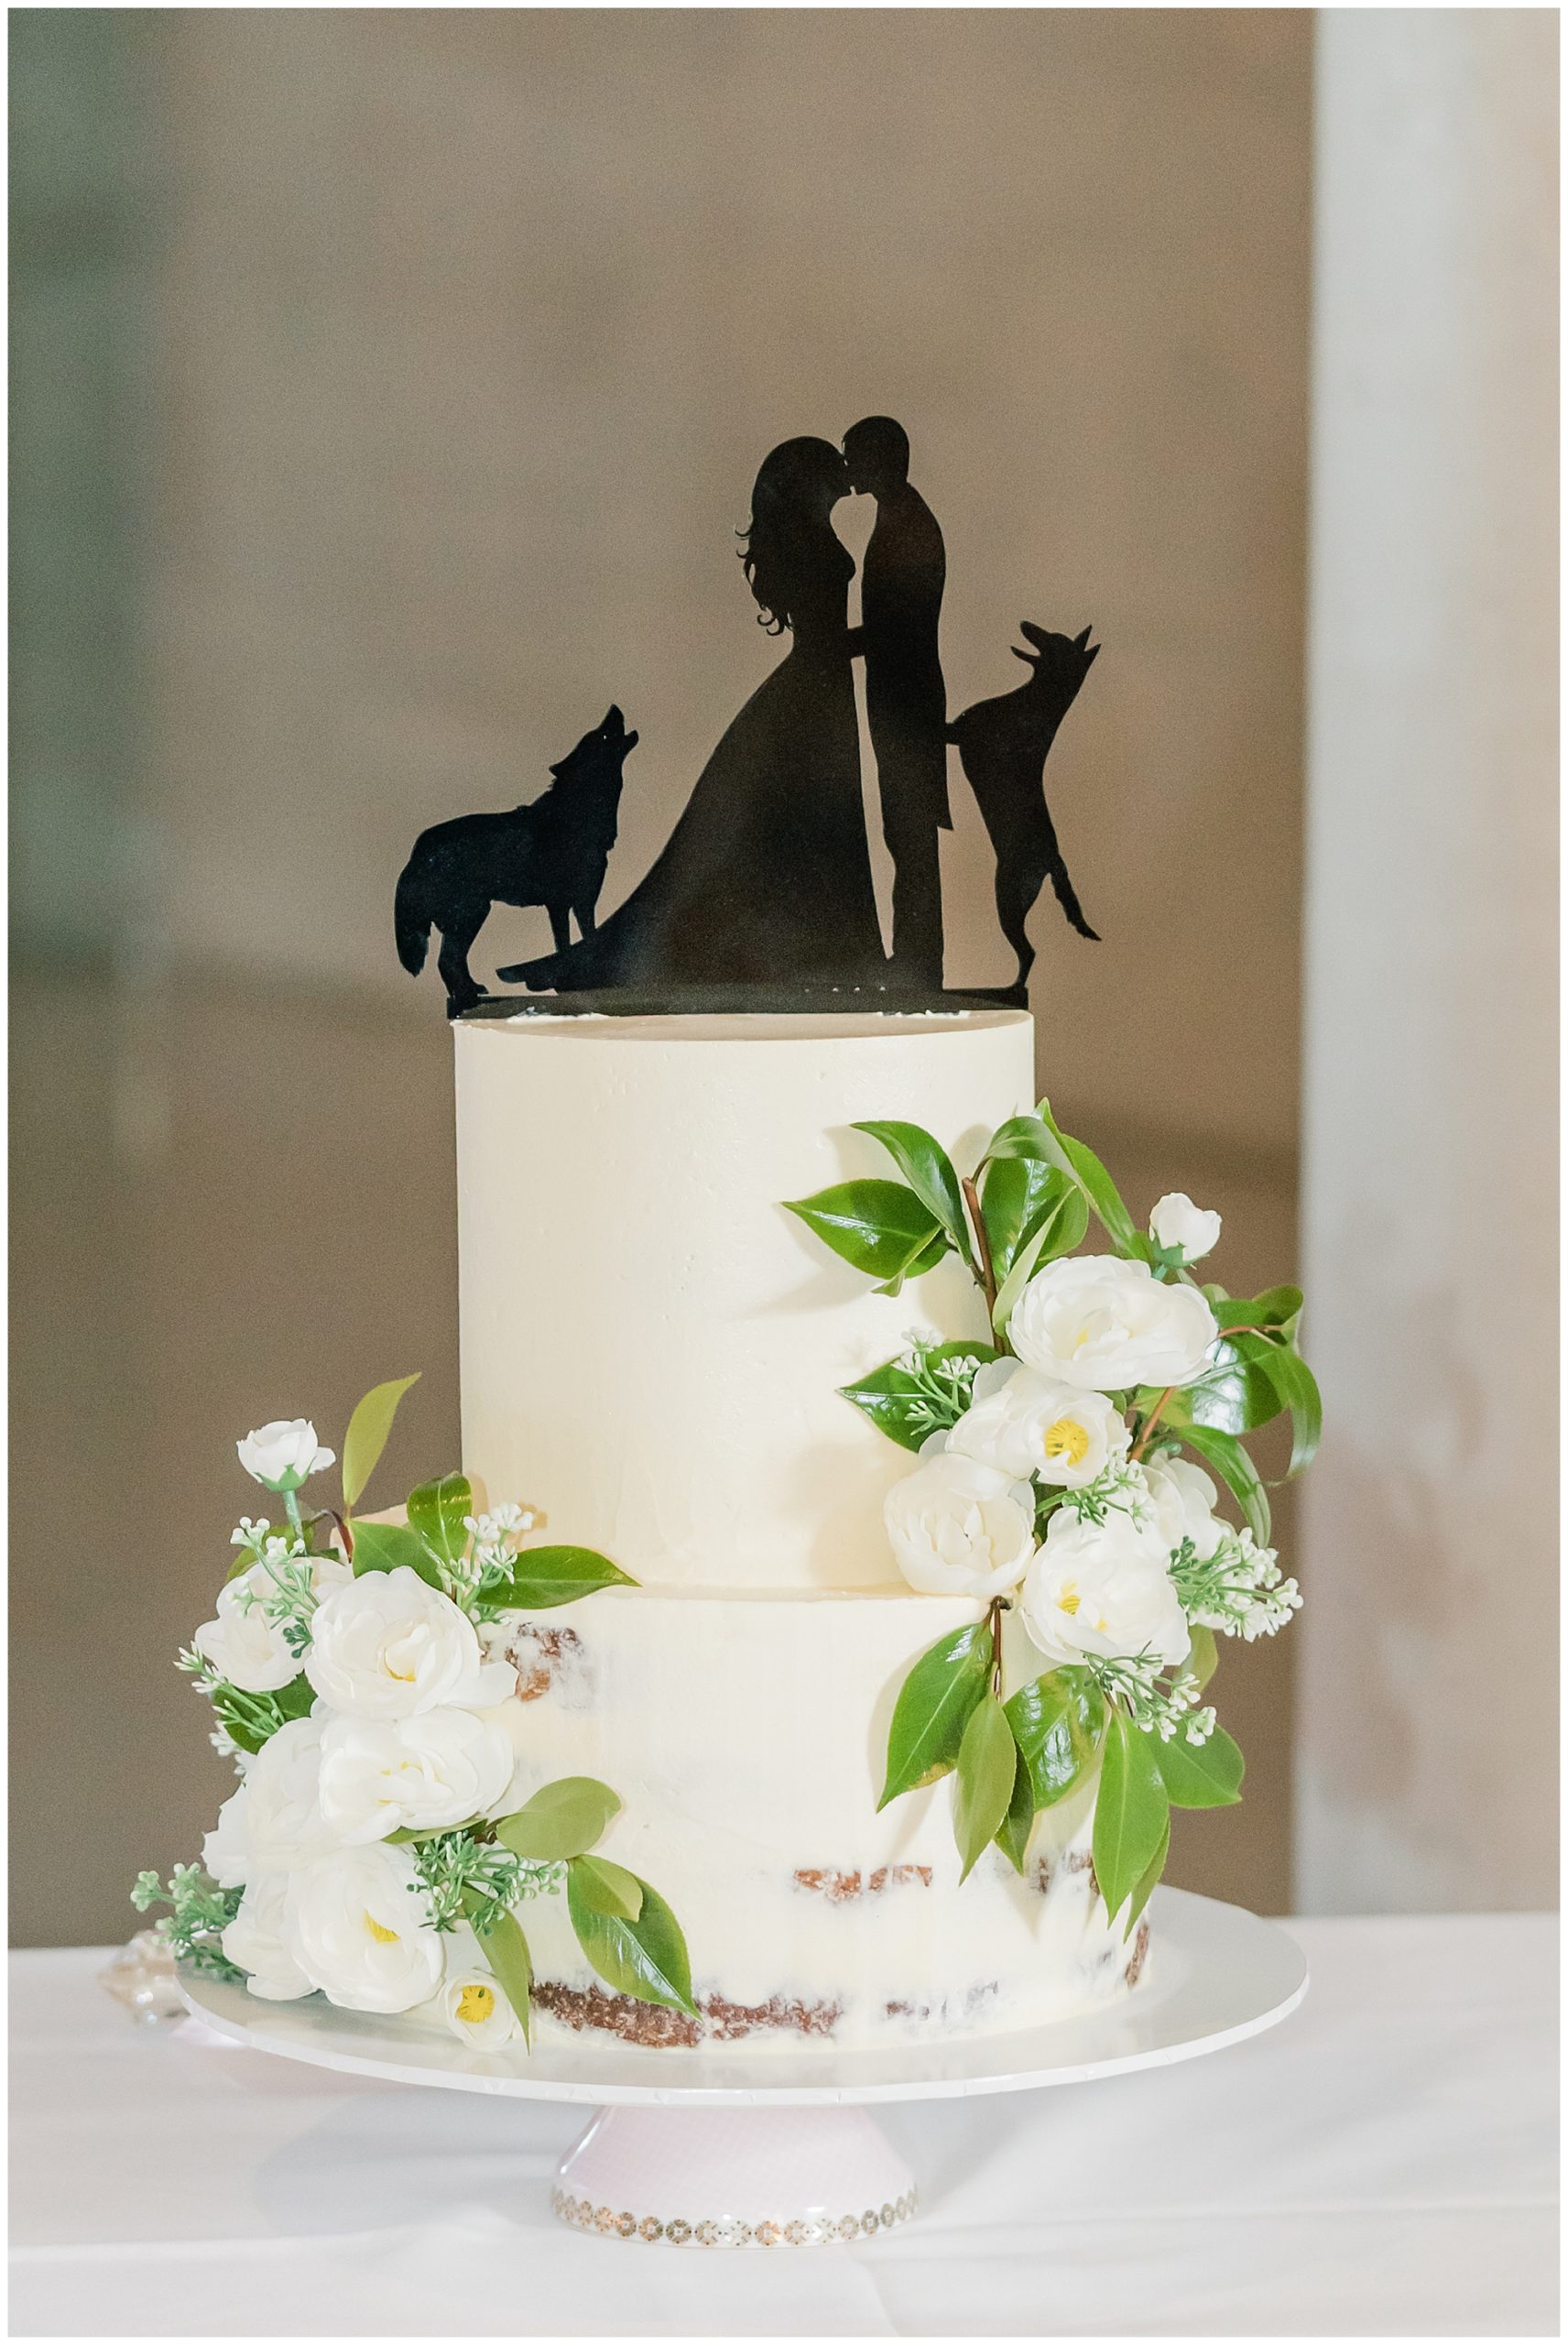 Wedding Cake with dog cake topper